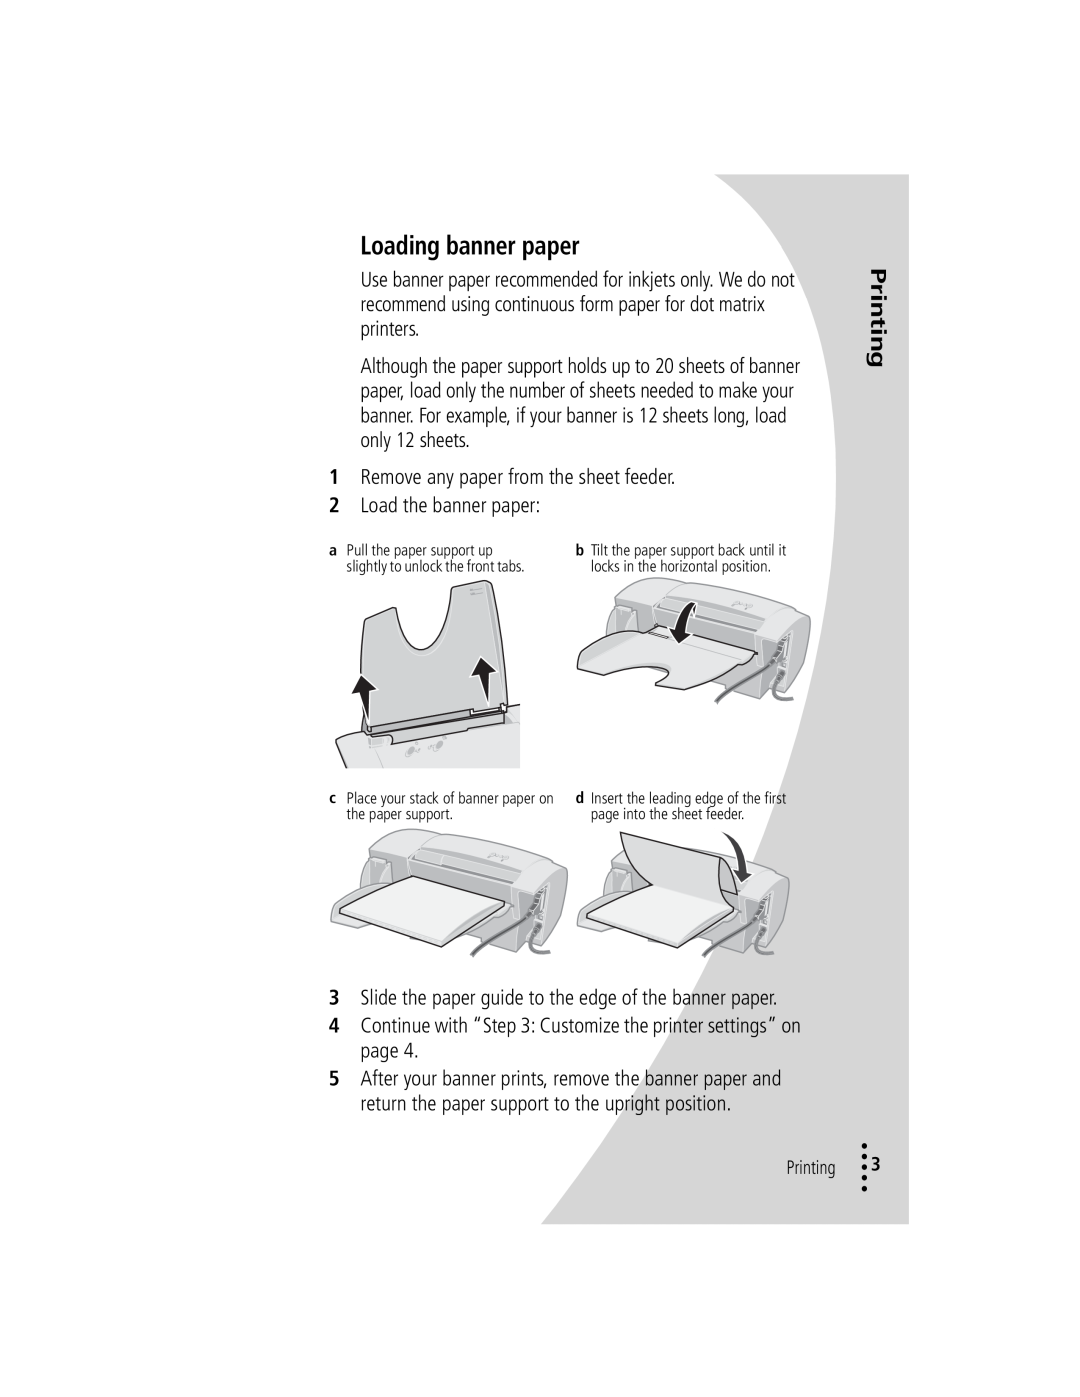 Lexmark Z12 manual Printing, Loading banner paper 